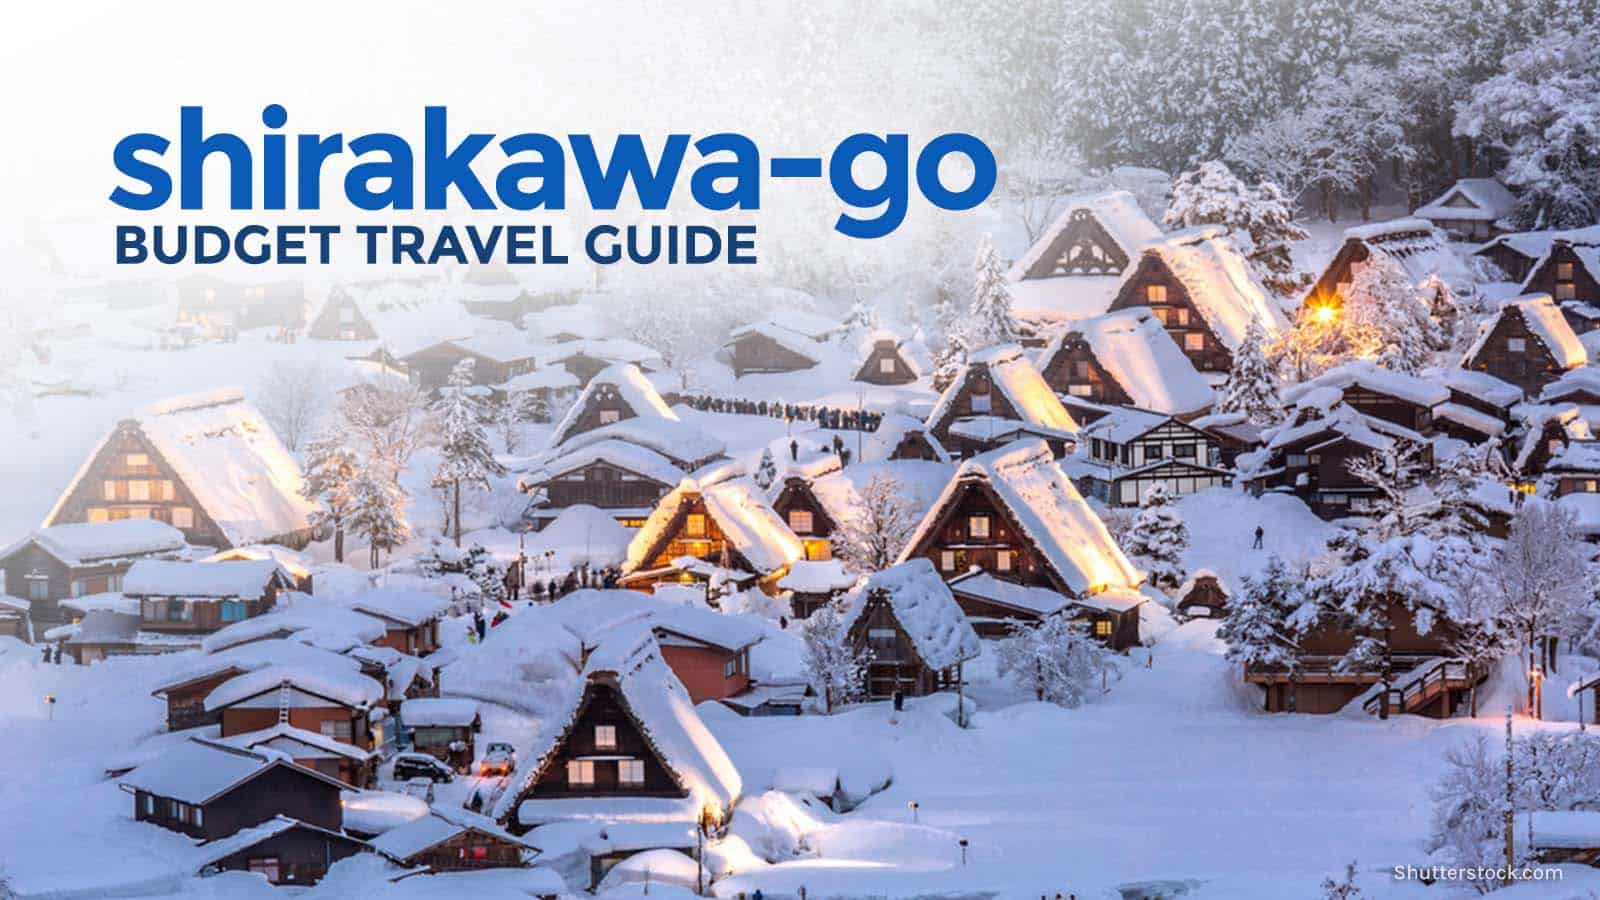 SHIRAKAWA-GO ON A BUDGET: Travel Guide & Itinerary